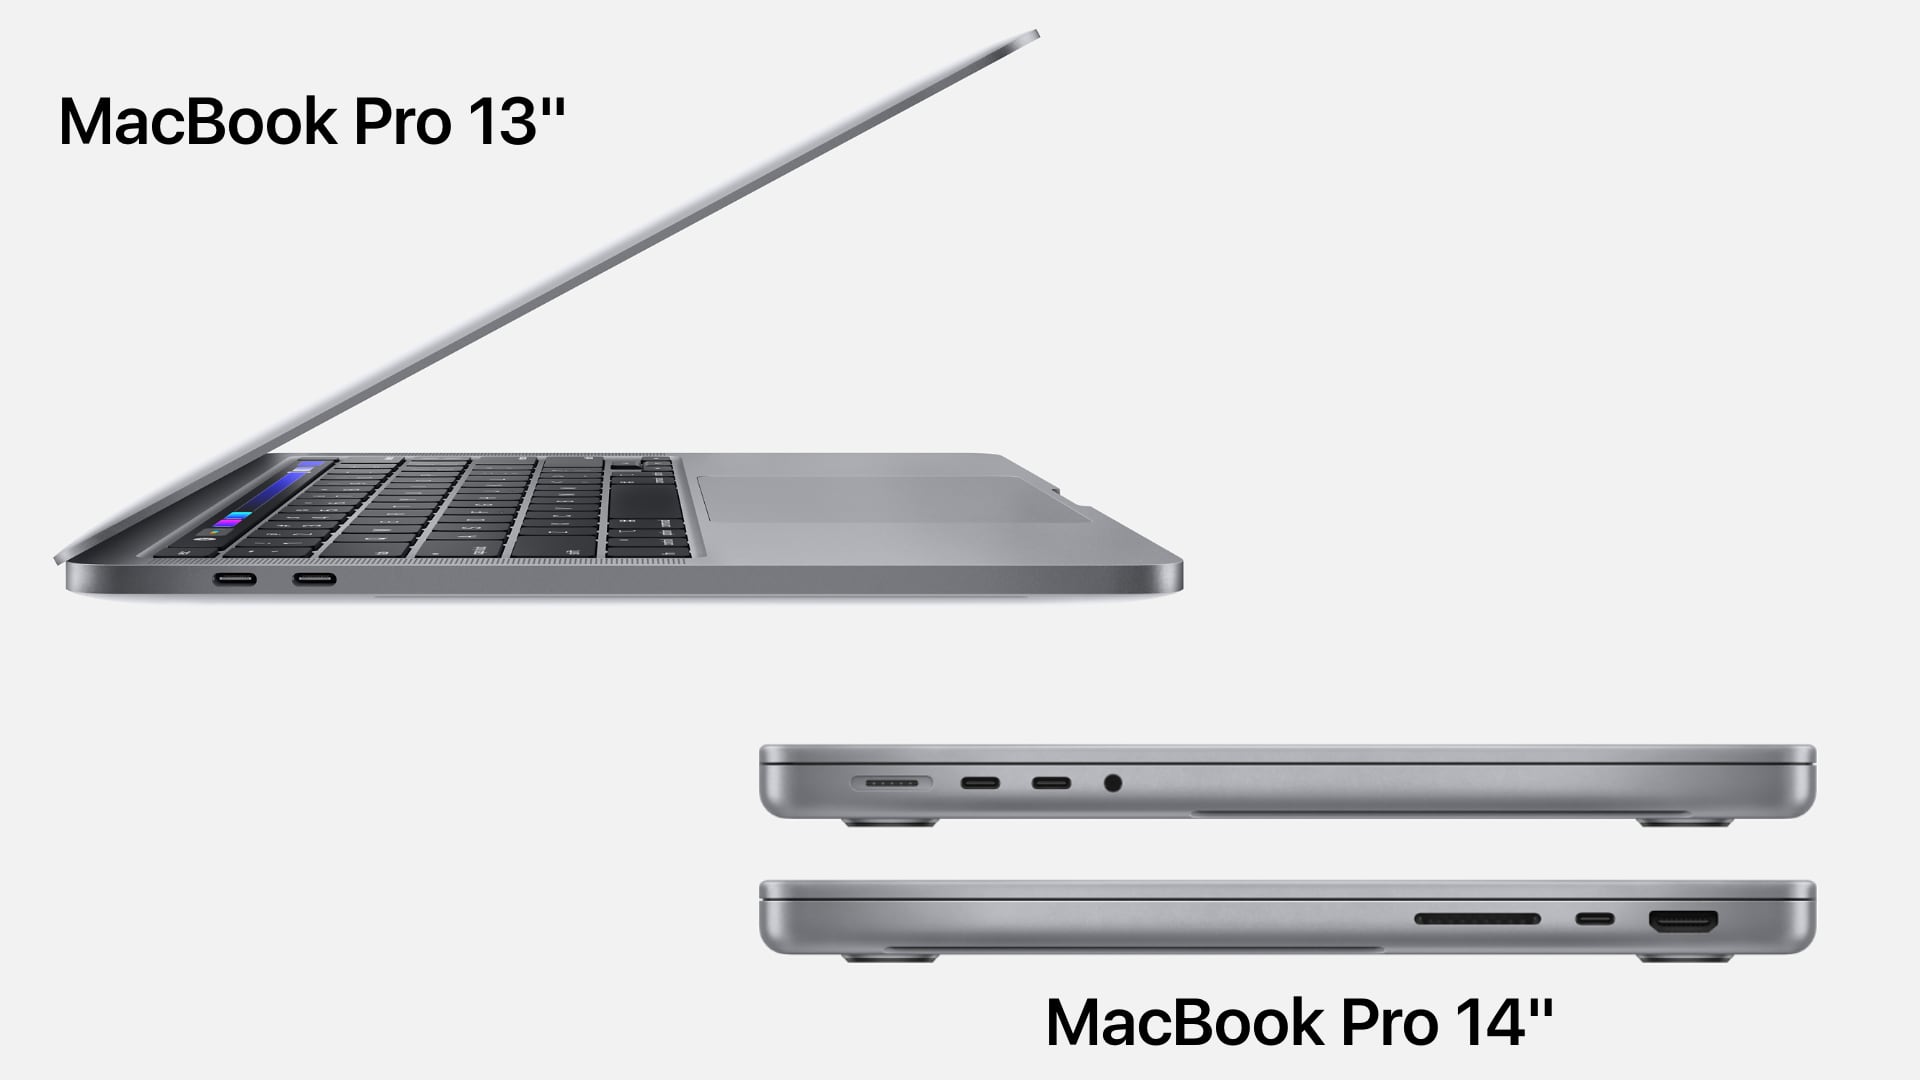  MacBook pro 13inch vs 14inch